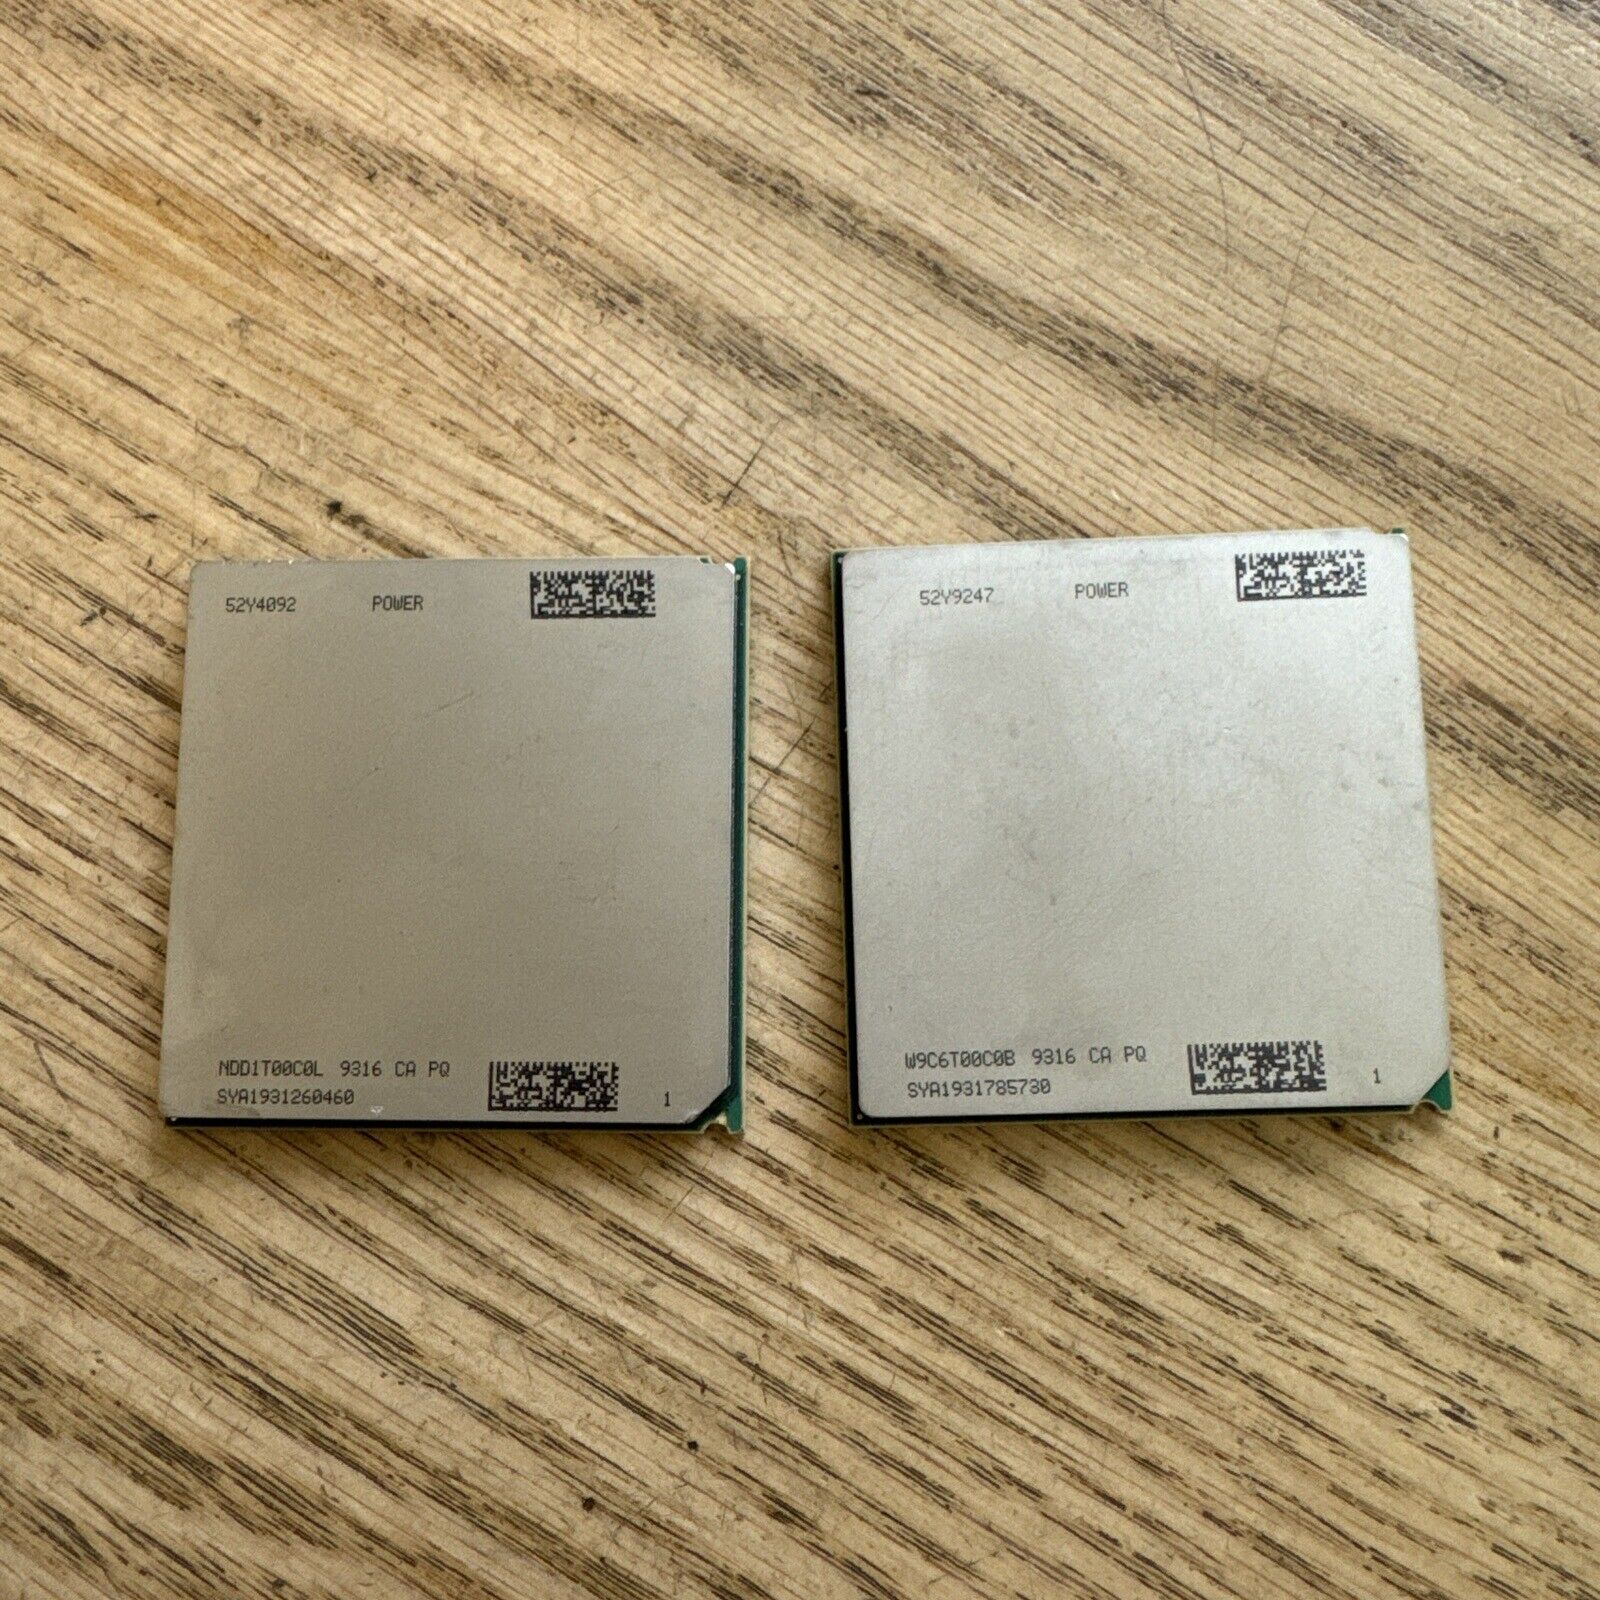 Lot of 2  IBM 5YA193 3.0GHz 4-Core Power7 Processor, CPU